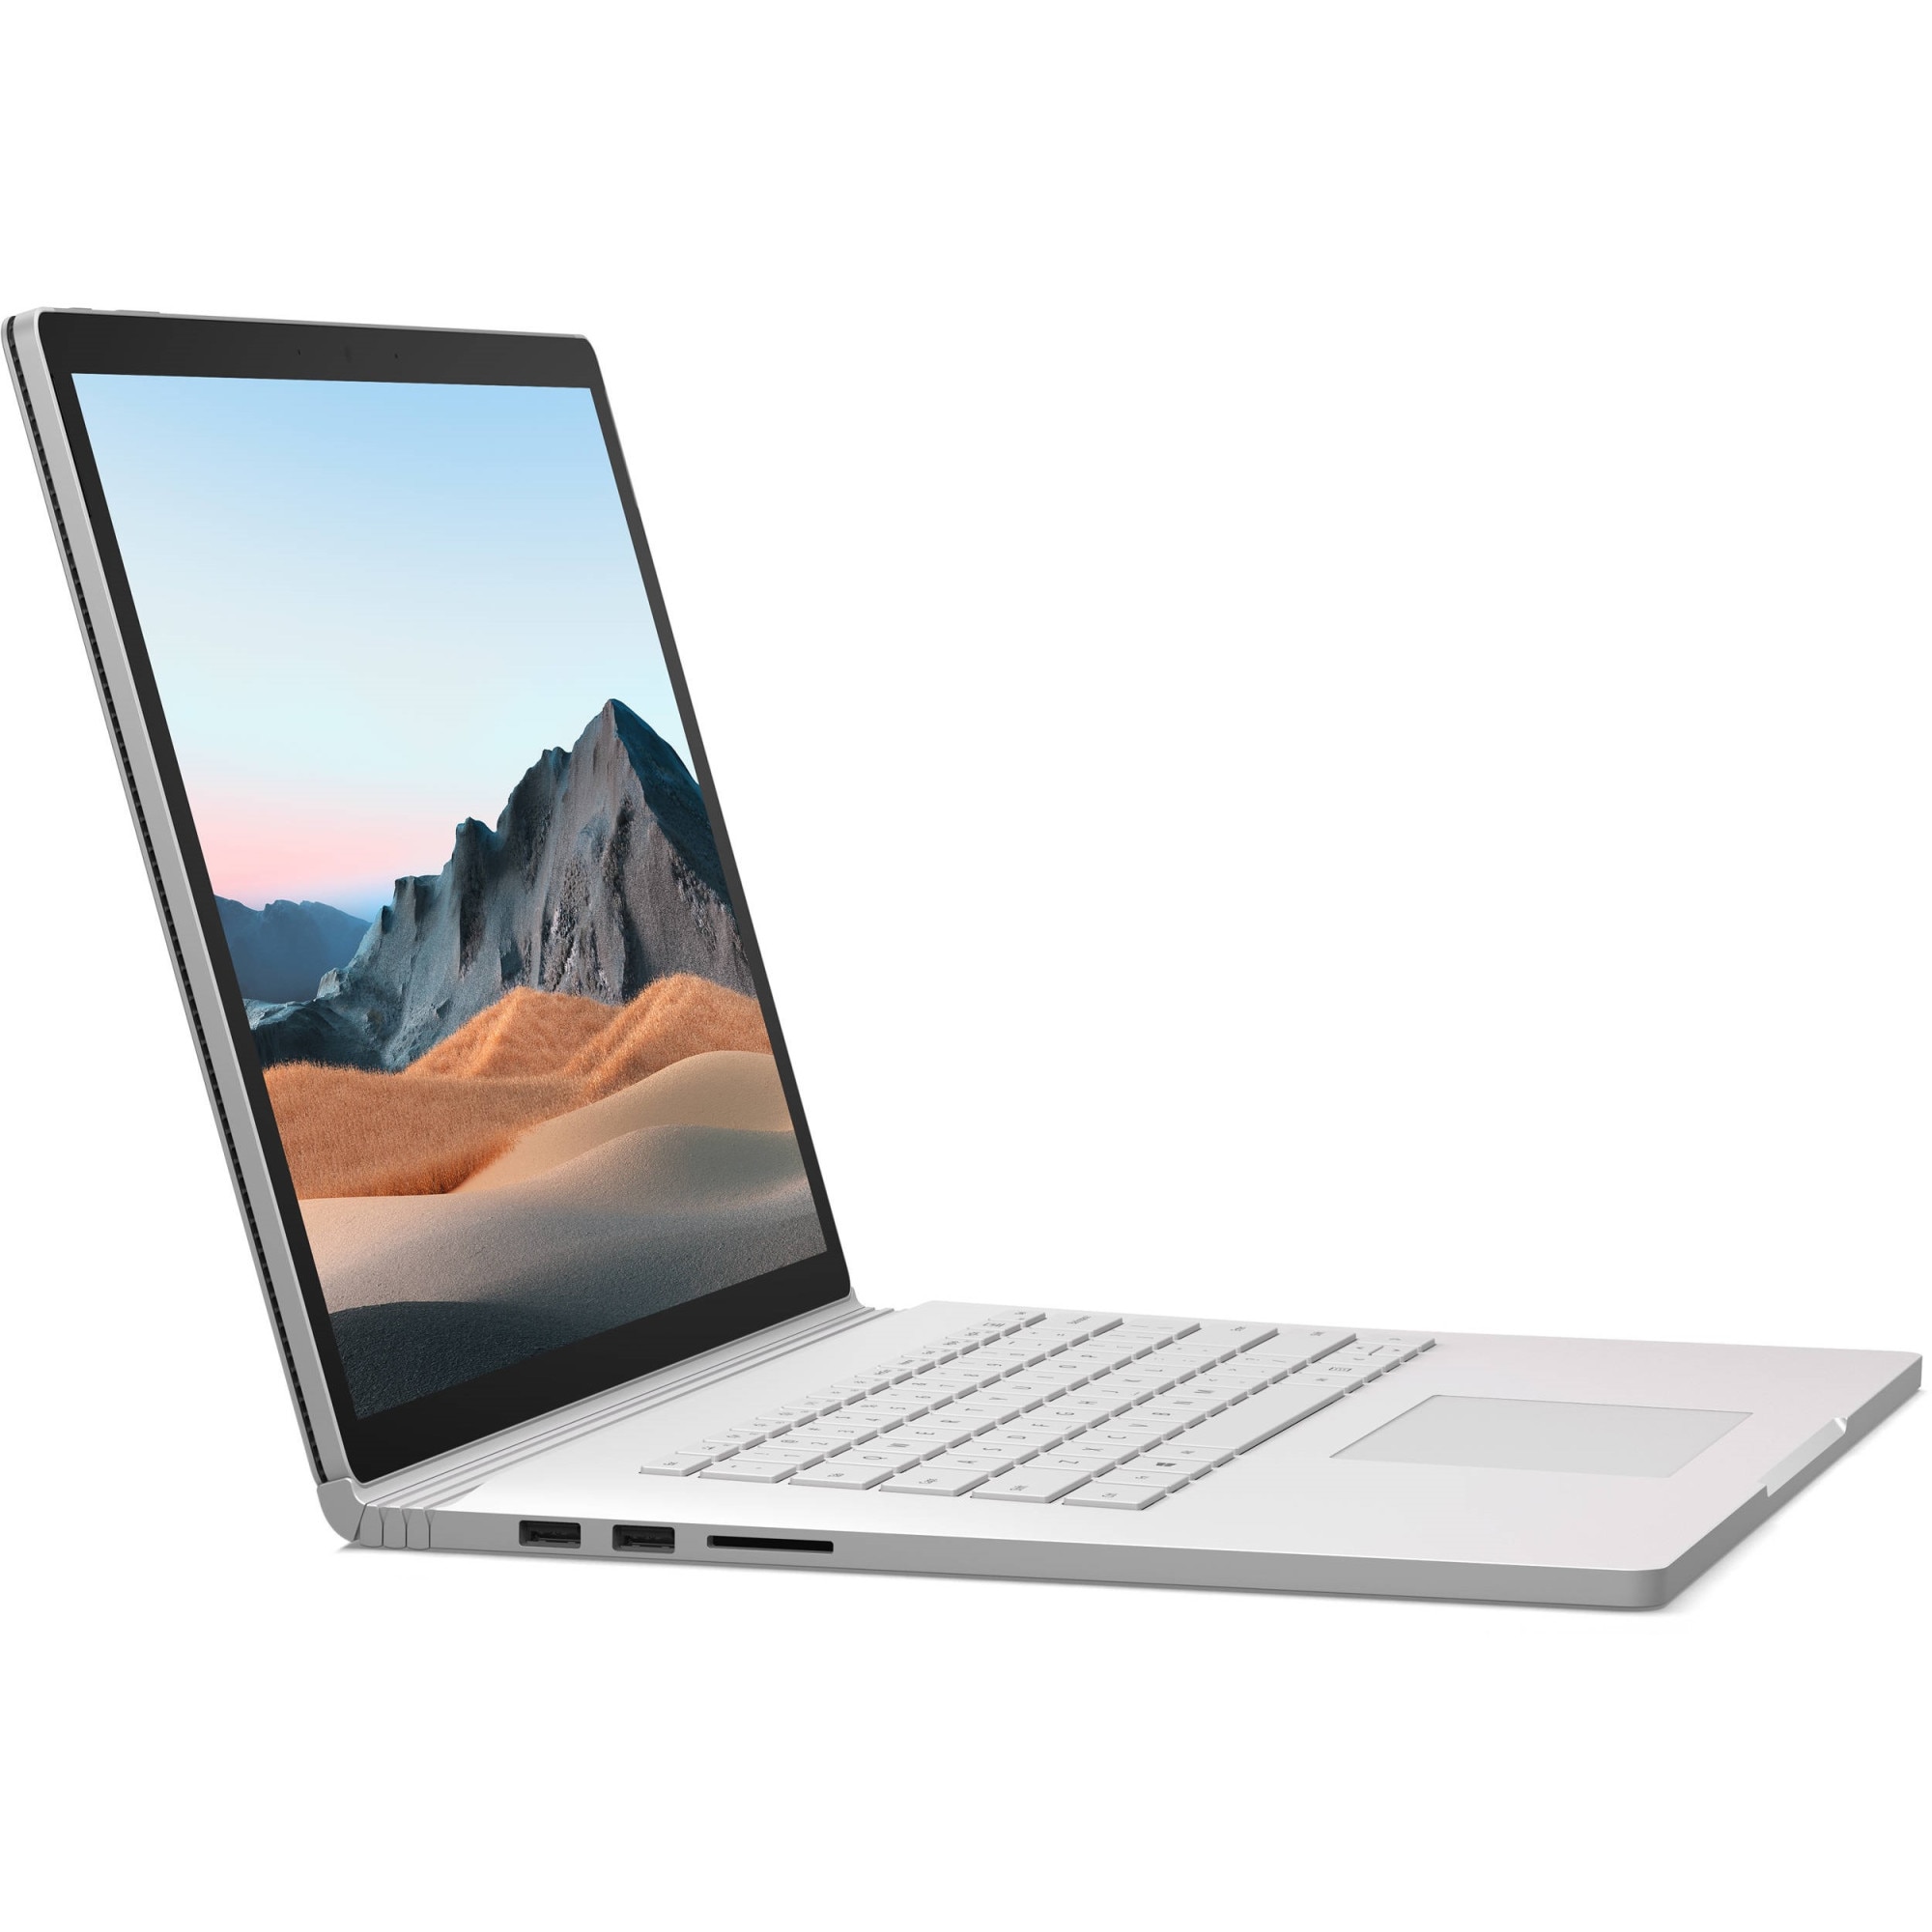 Laptop Microsoft Surface Book 3 S Intel Core I7 1065g7 1 30 3 90 Ghz 8m 32 Gb 512gb M 2 Ssd Nvidia Gtx 1650 4gb Gddr5 Windows 10 Home 64 Bit Srebrist Emag Bg